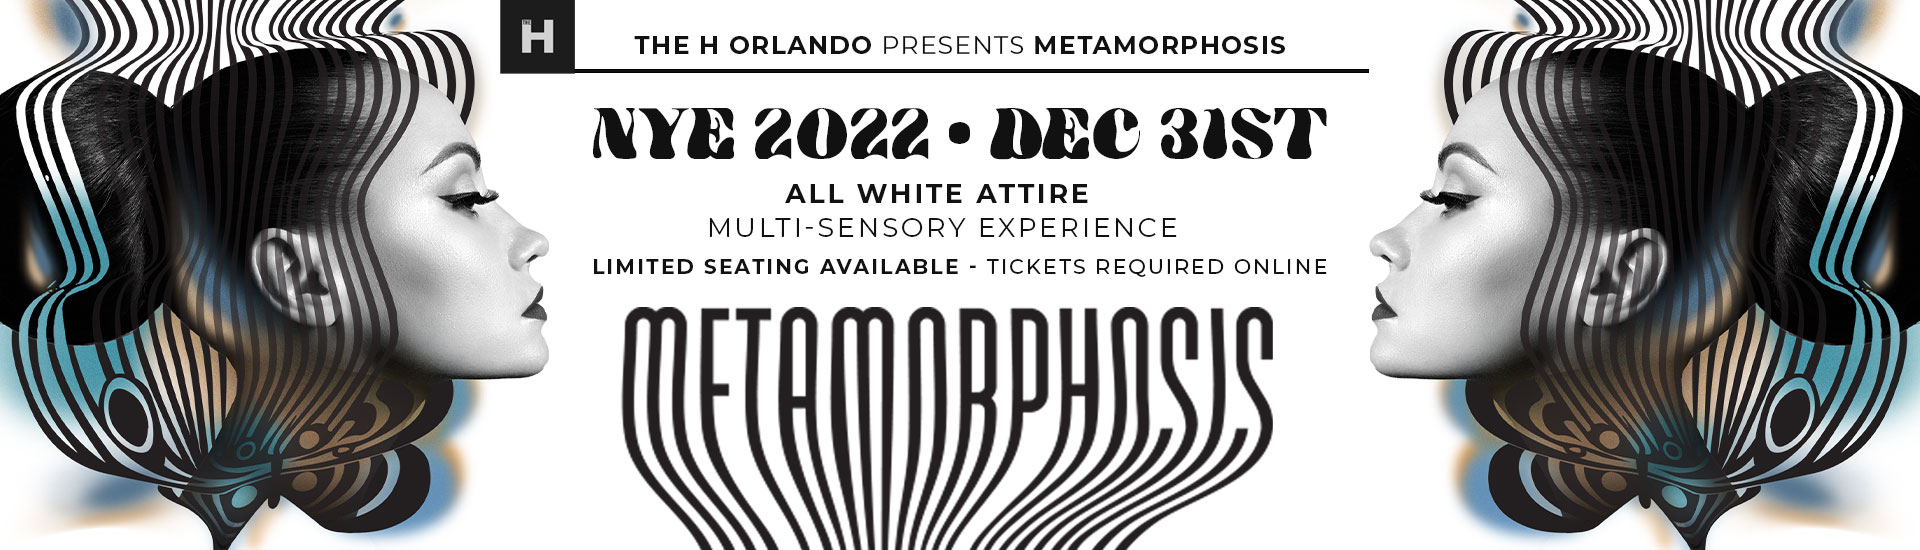 NYE 2022 - The H Orlando PresentsMetamorphosis - Banner